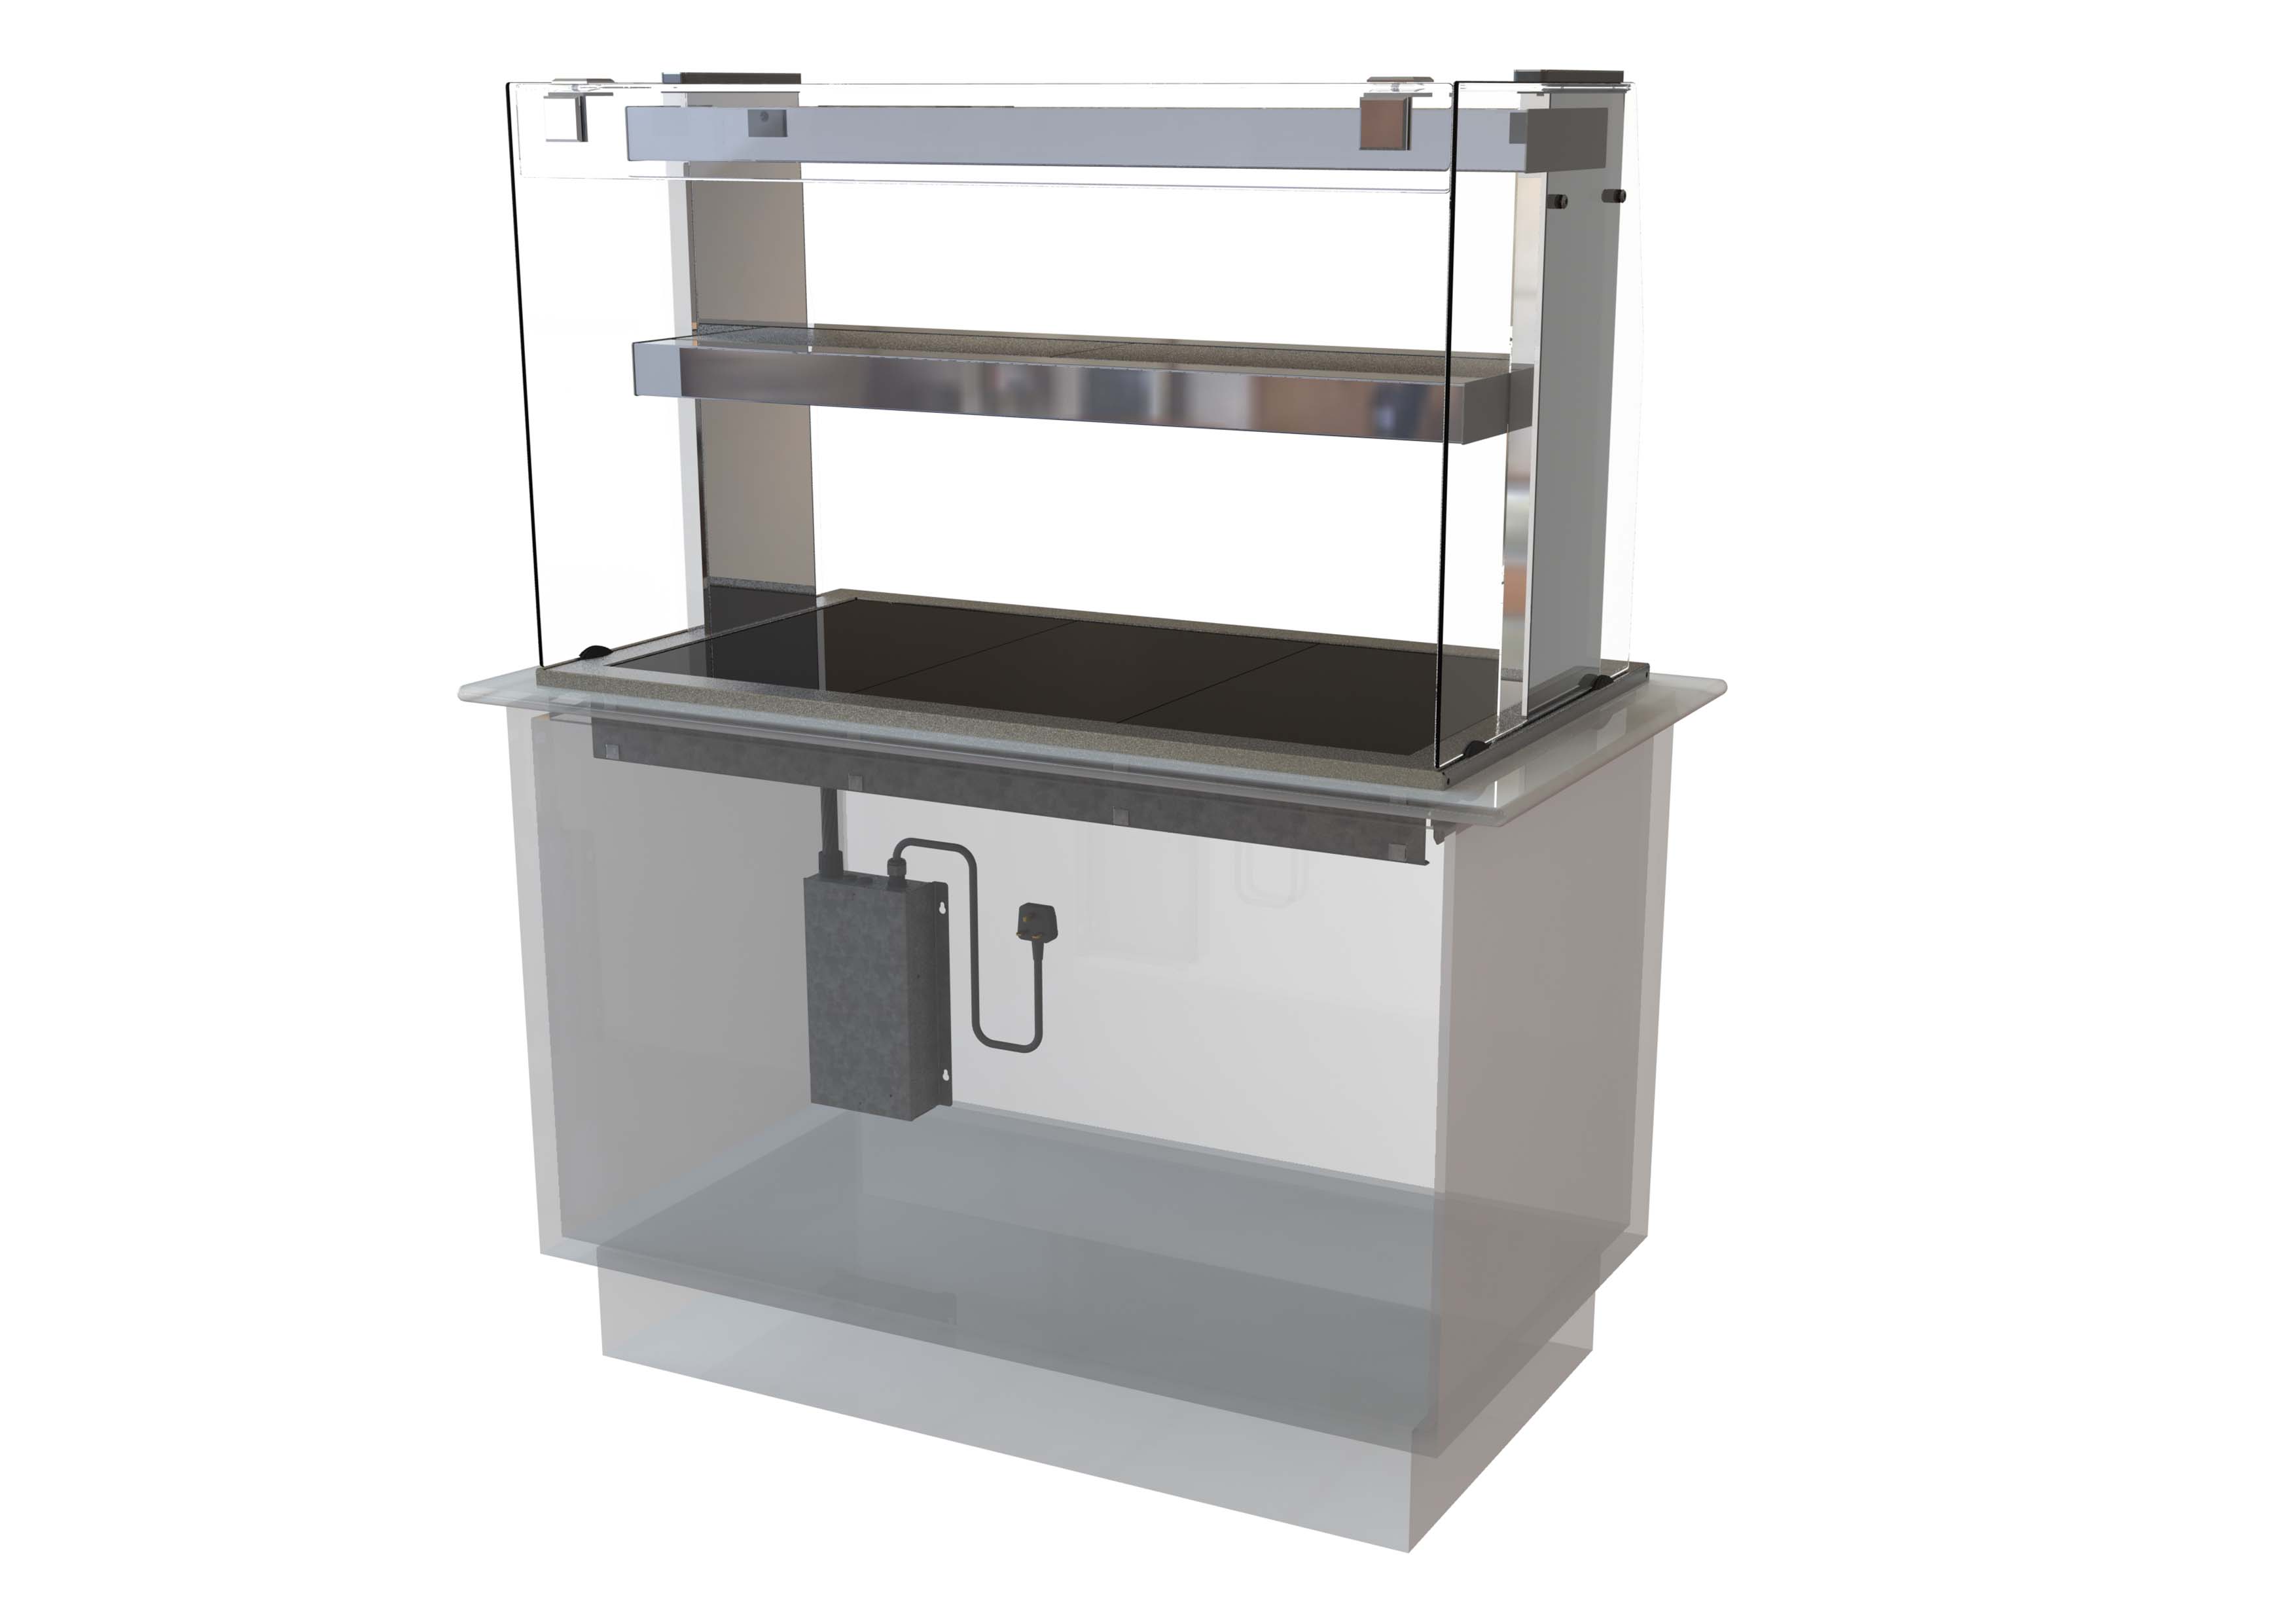 Kubus Self Help Ceran Glass Hotplate & Heated Mid-Shelf (KHP2-5PS)